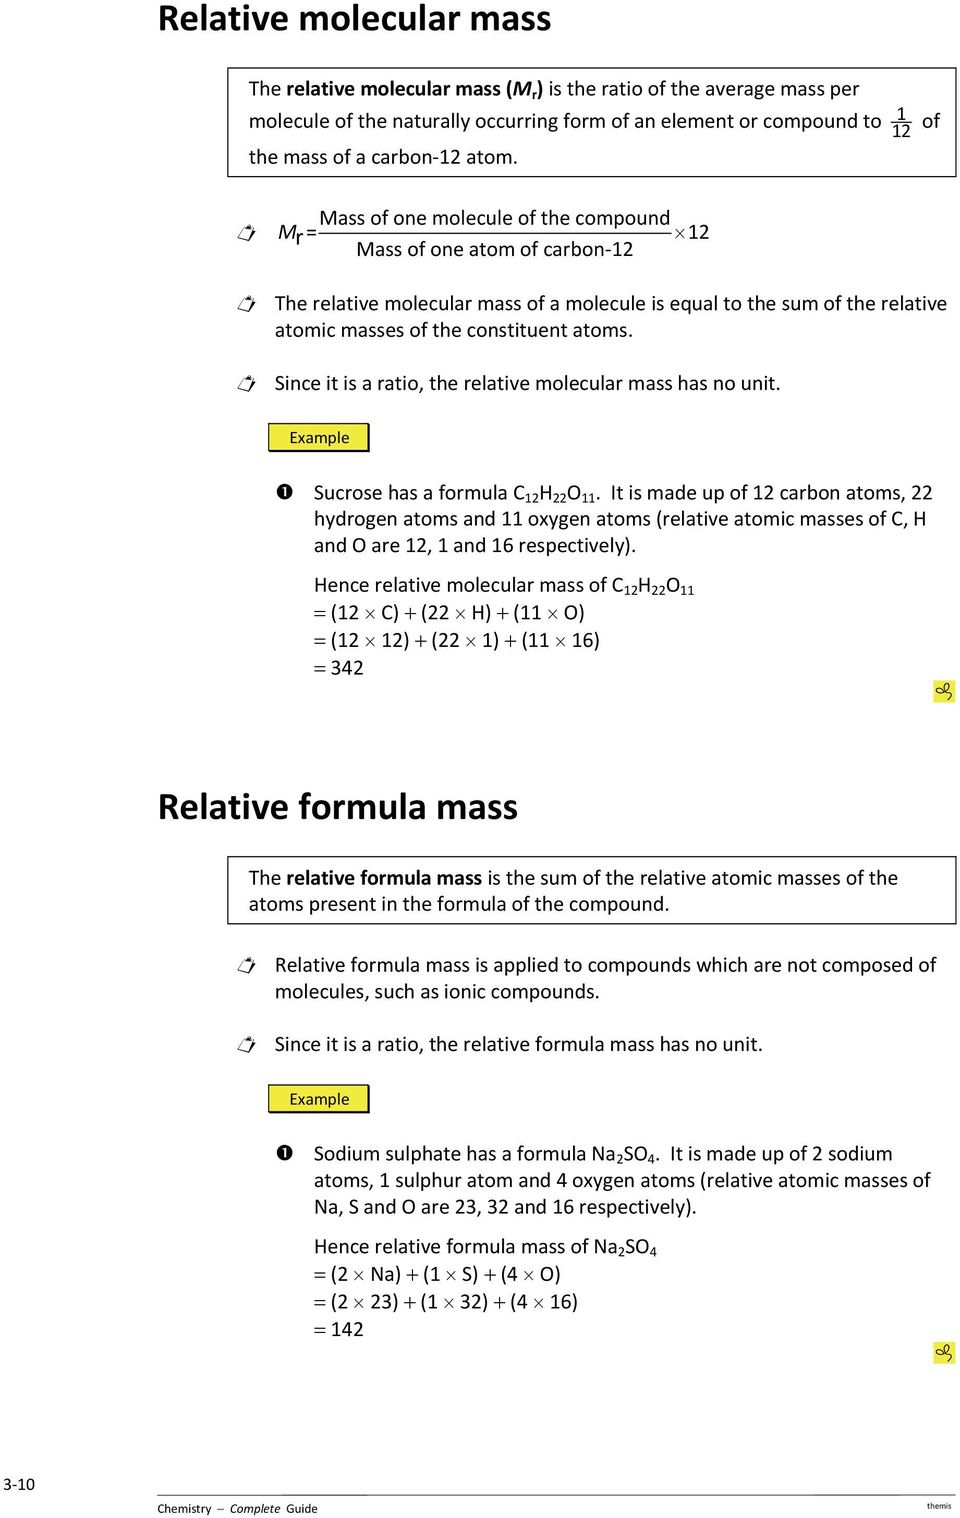 Since it is a ratio, the relative molecular mass has no unit. Sucrose has a formula C 12 H 22 O 11.